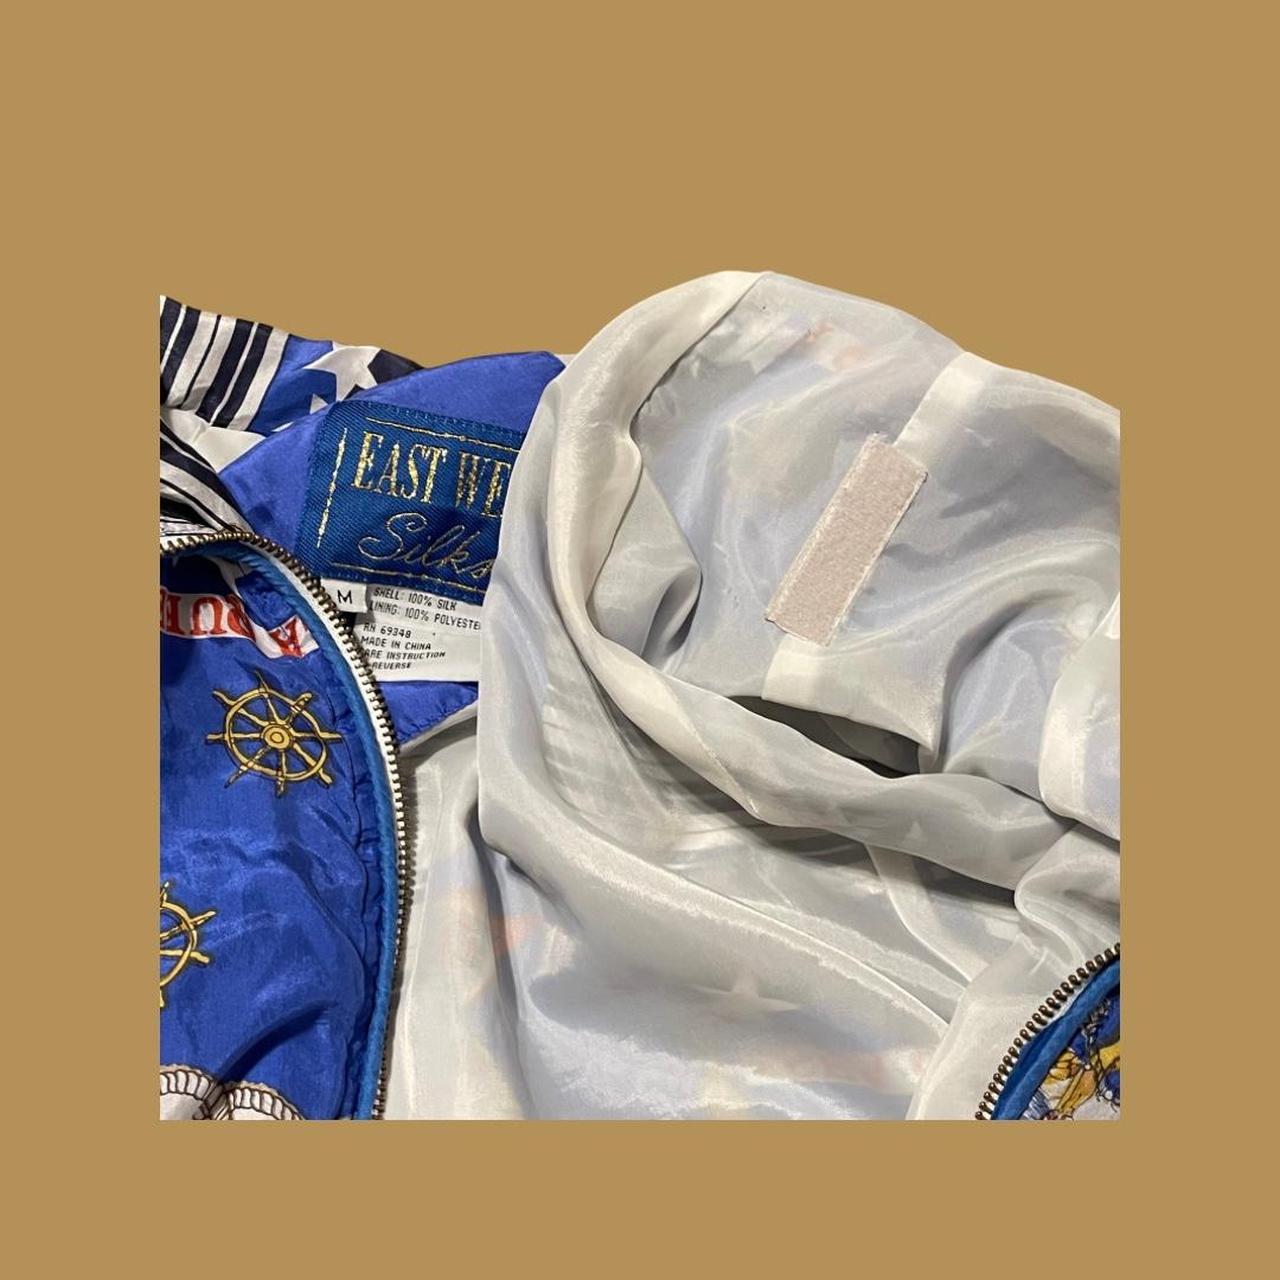 East West Men's multi Jacket (3)